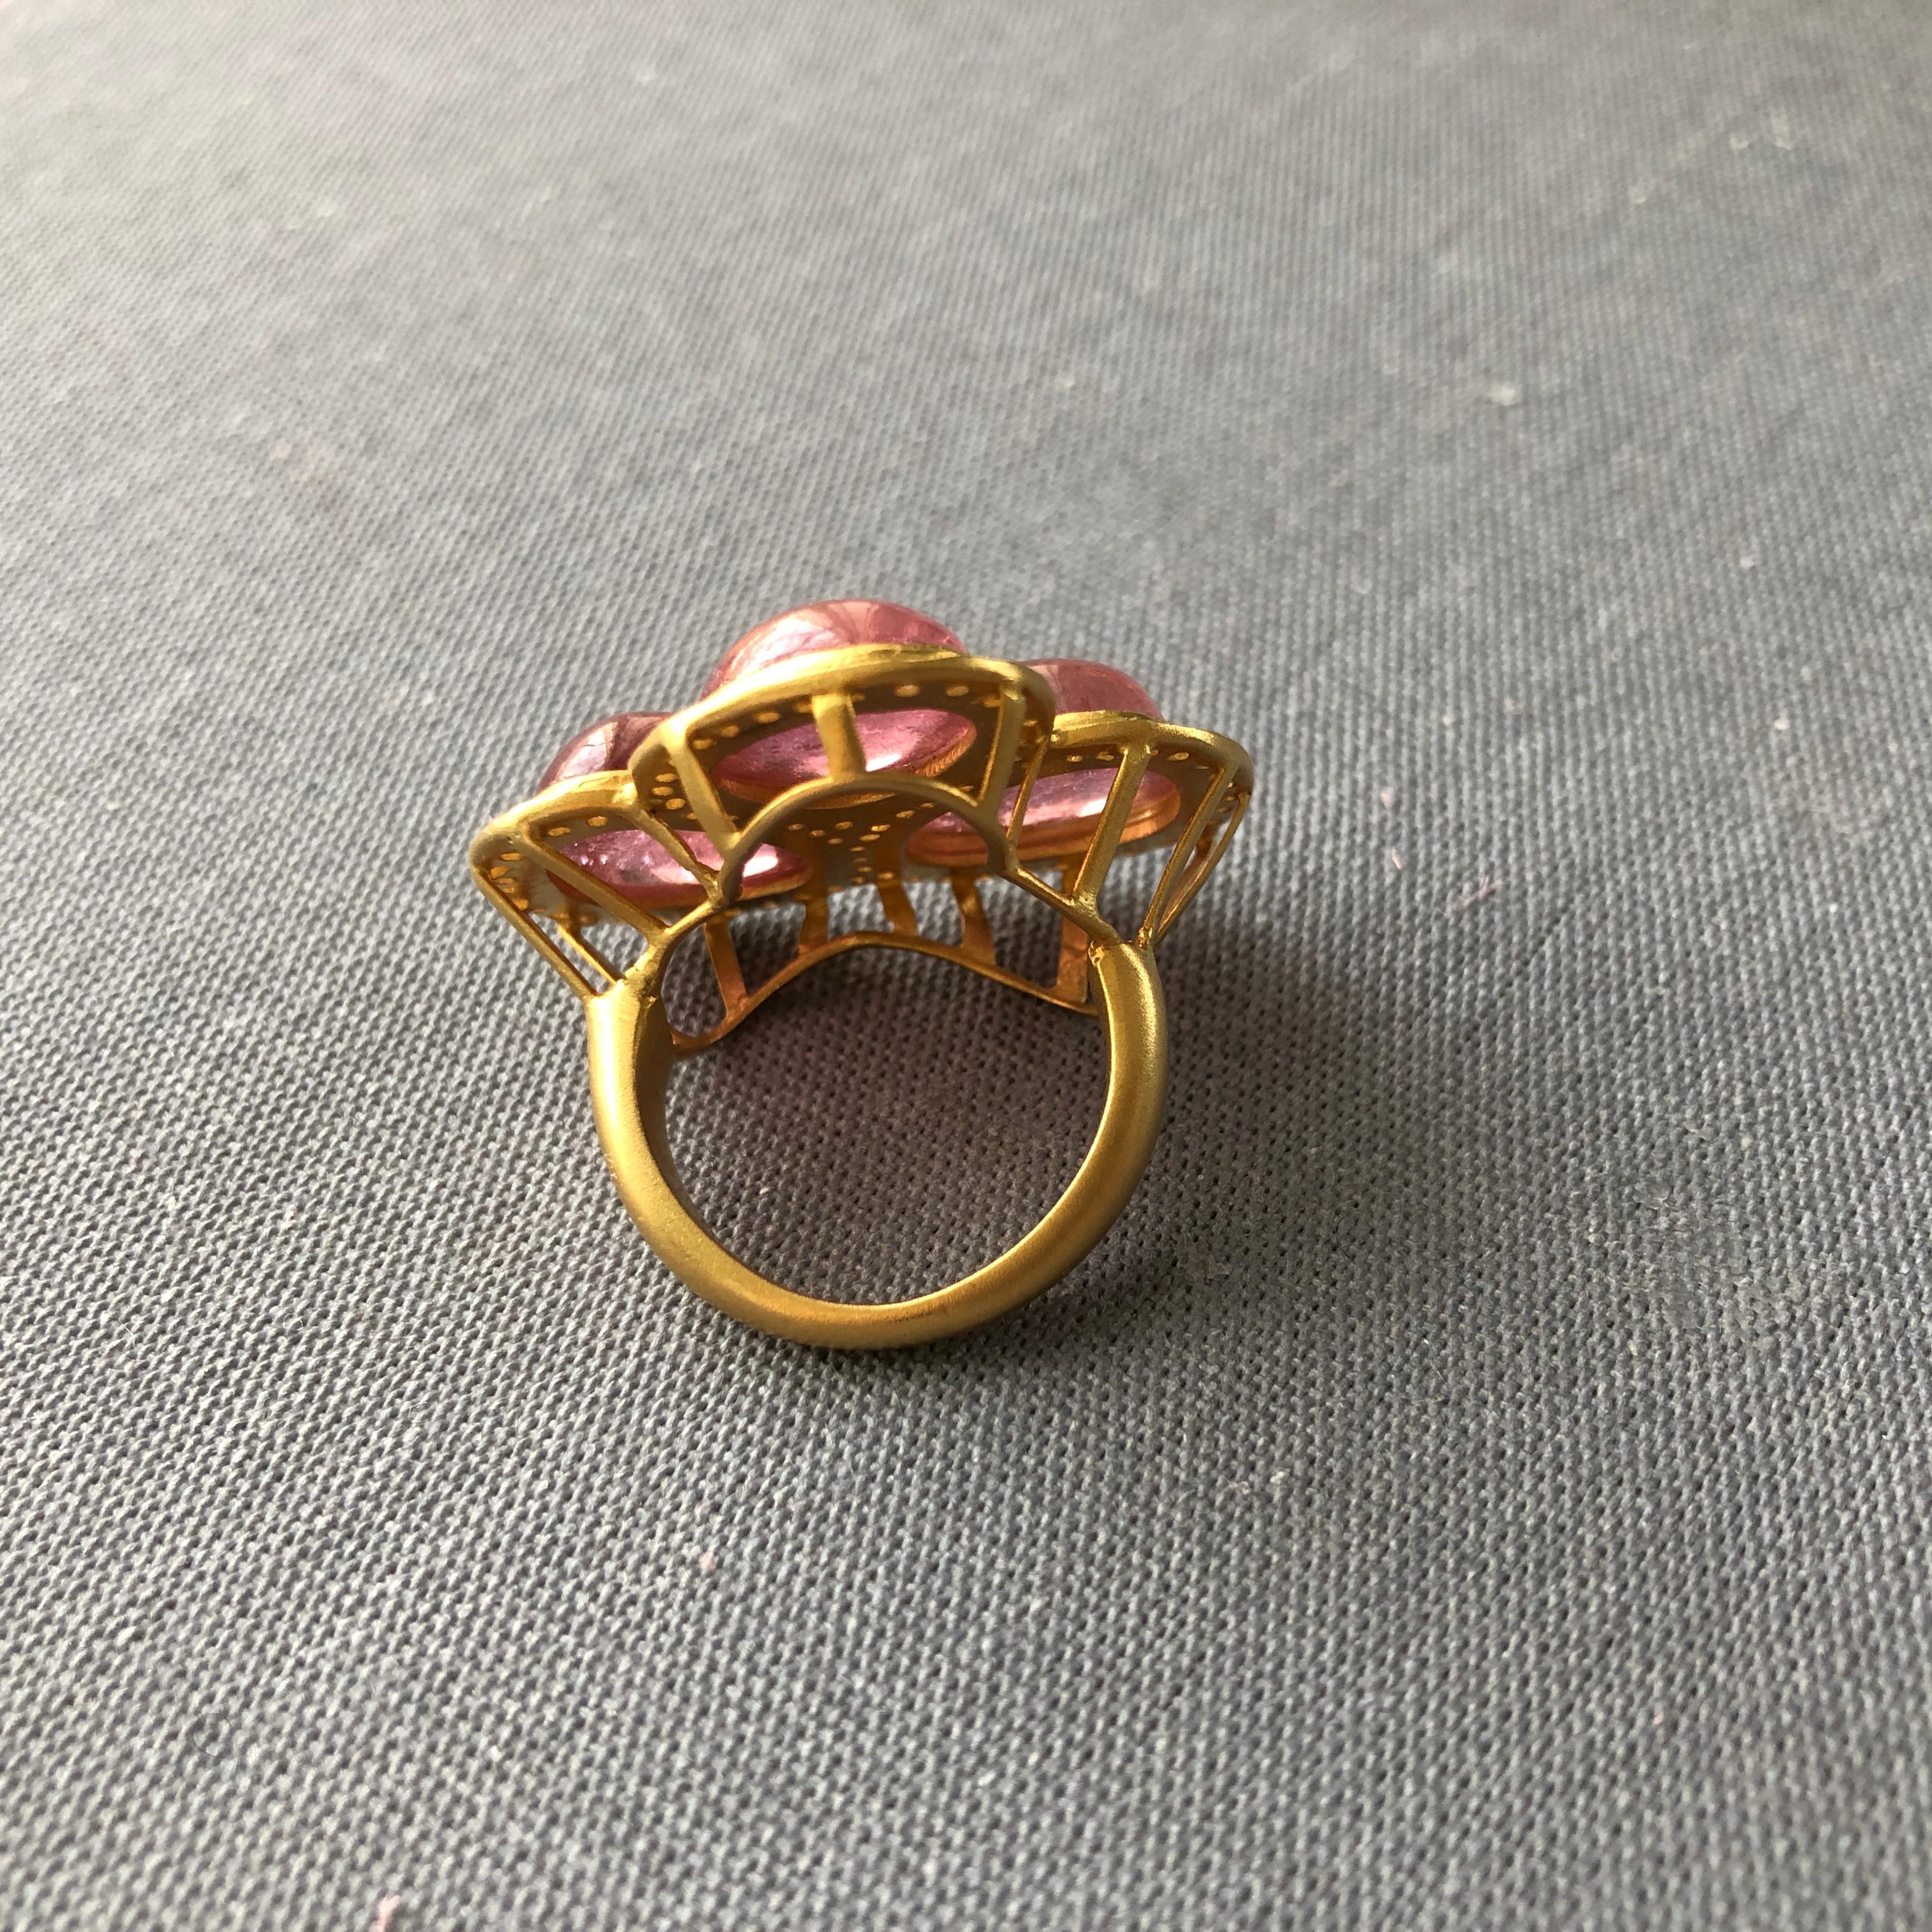 22.91 Carat Pink Tourmaline Diamond Cocktail Ring by Lauren Harper For Sale 3